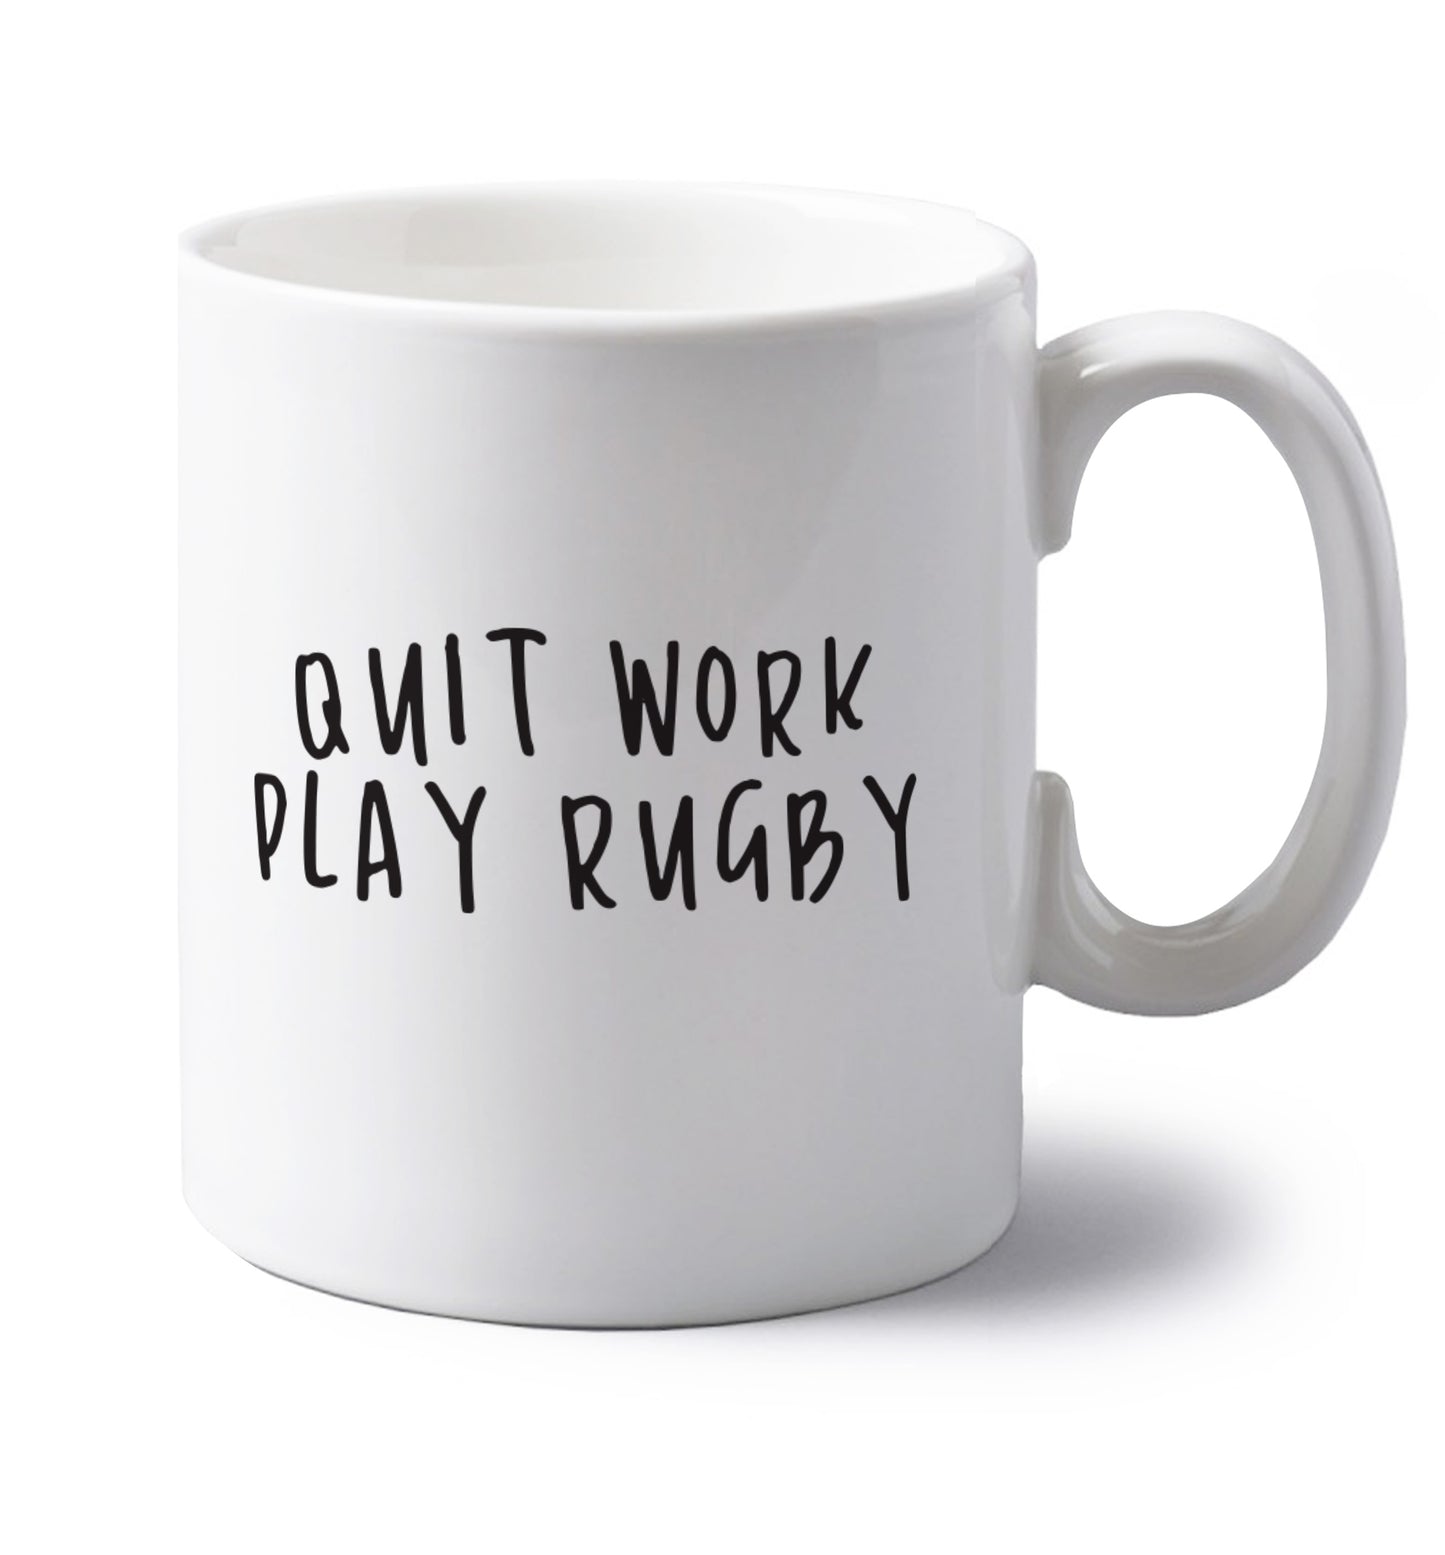 Quit work play rugby left handed white ceramic mug 